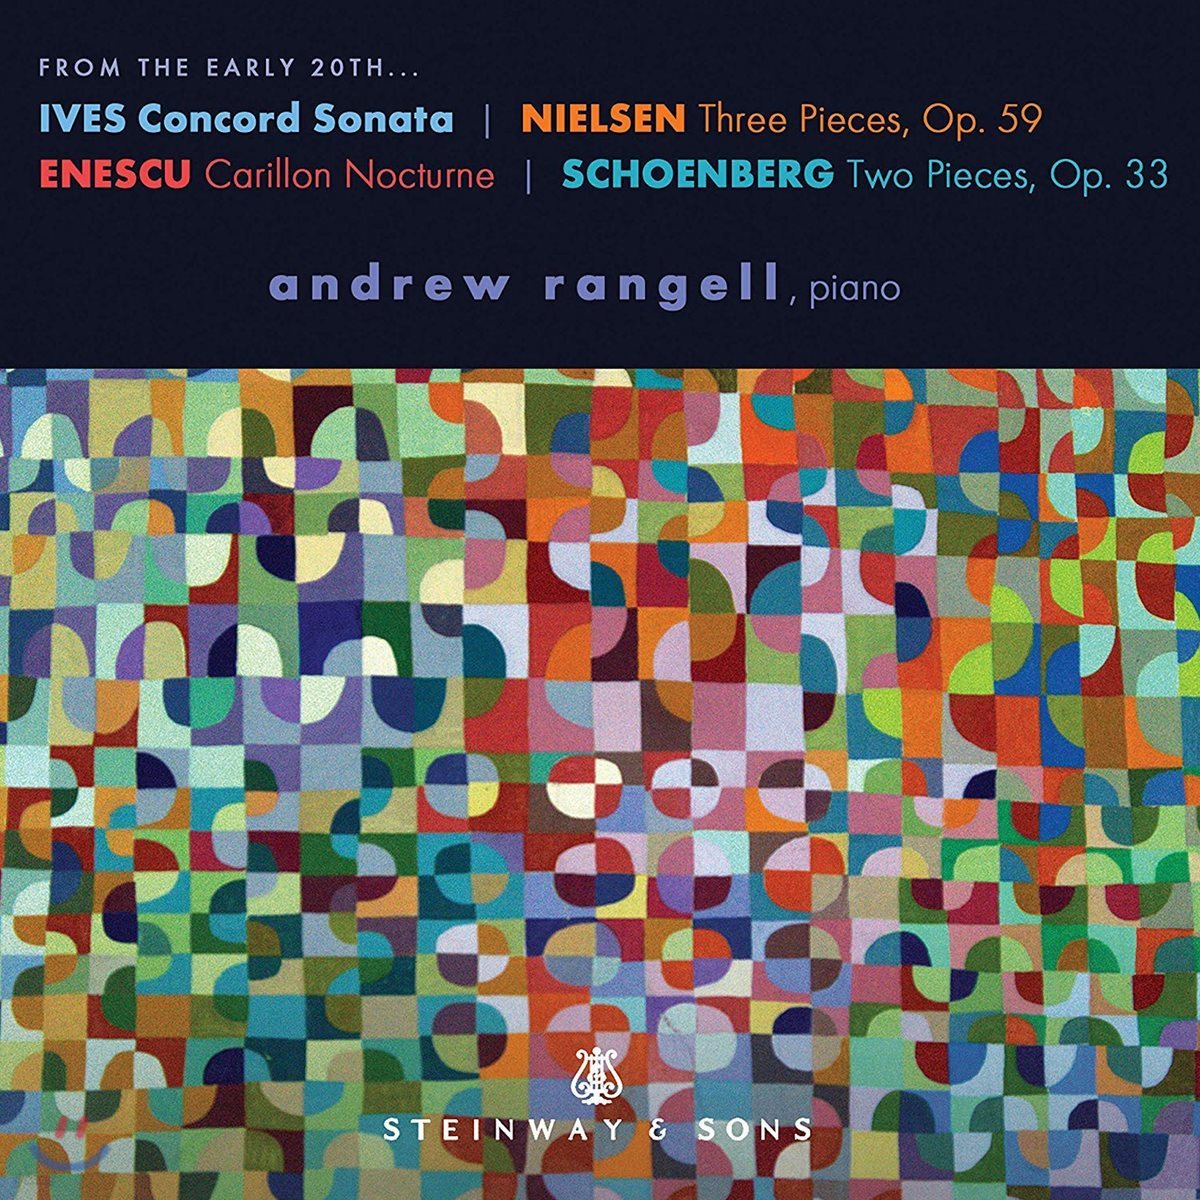 Andrew Rangell 닐센: 세 개의 작품 / 에네스쿠: 카리용 녹턴 / 아이브즈: 콩코드 소나타 등 (From The Early 20Th)